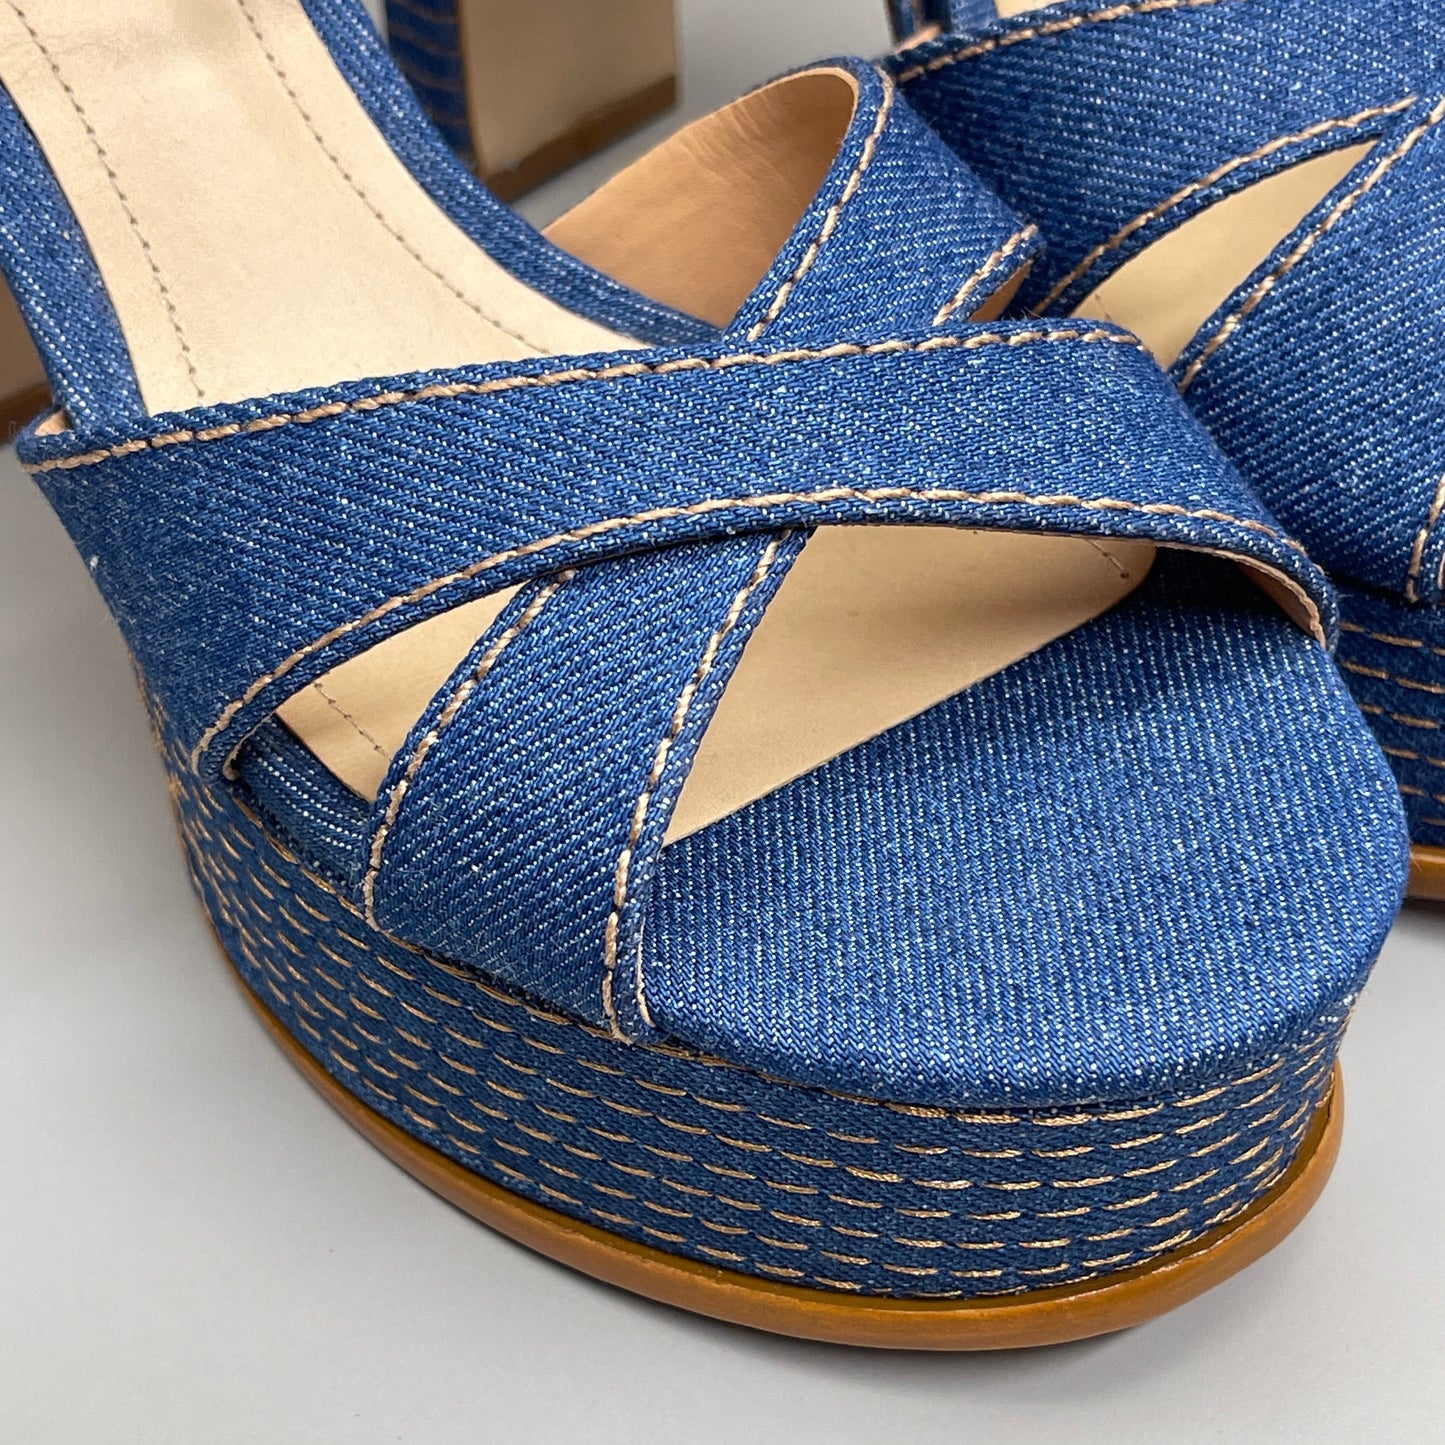 SCHUTZ Keefa Casual Denim Women's 4" Heeled Sandal Platform Blue Sz 6B (New)